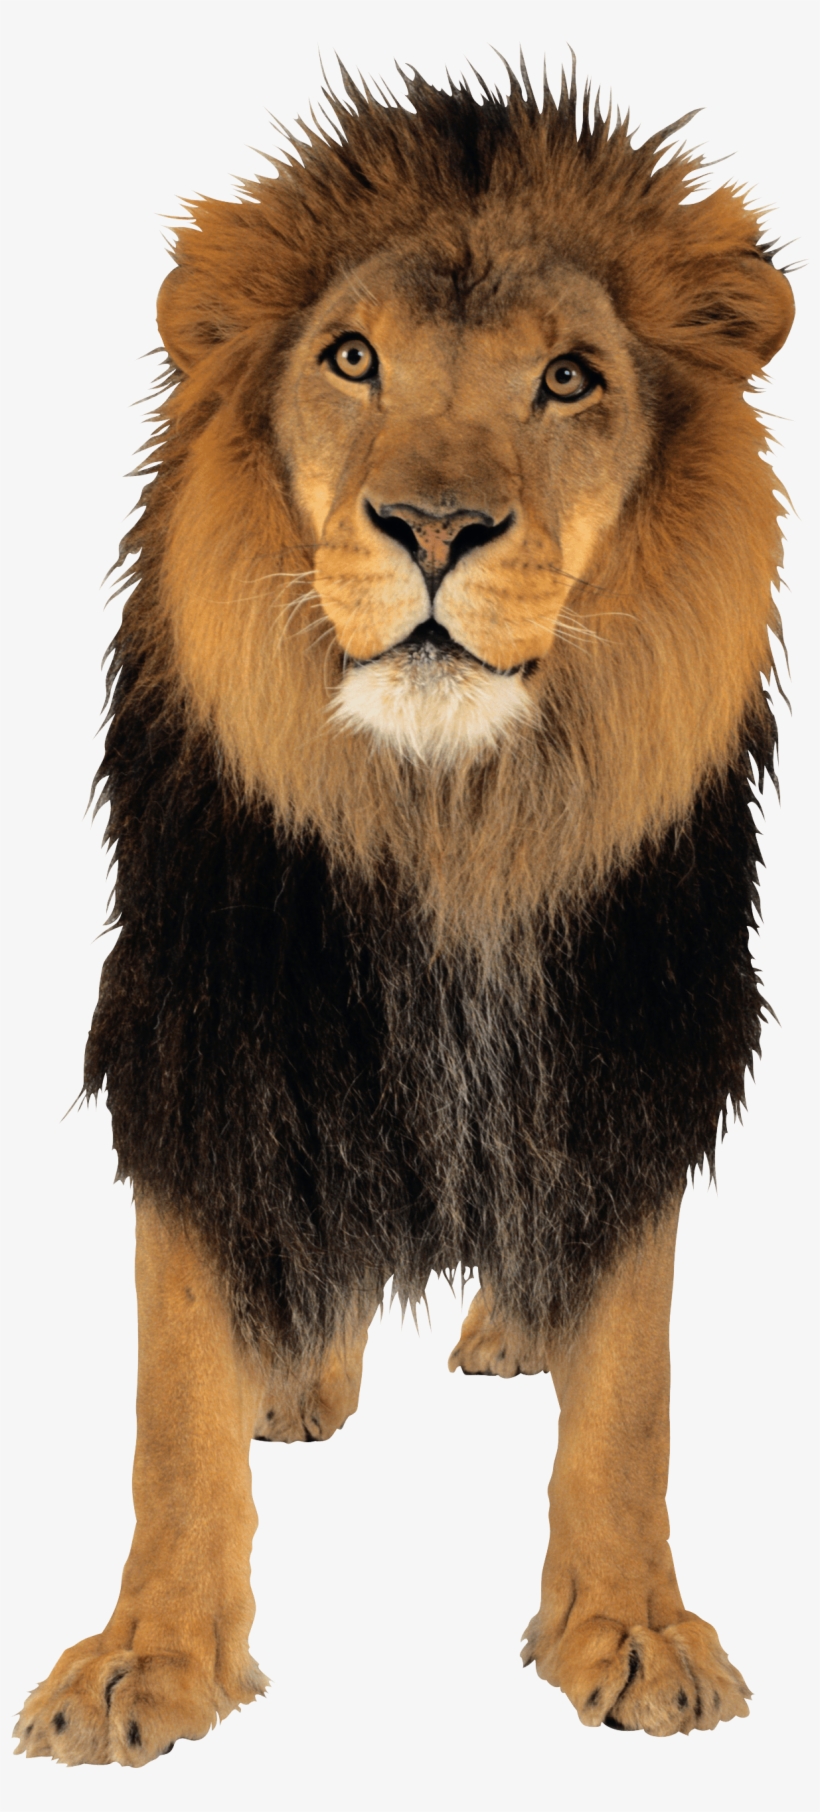 Lion Png Free Download - Lion Png, transparent png #26677